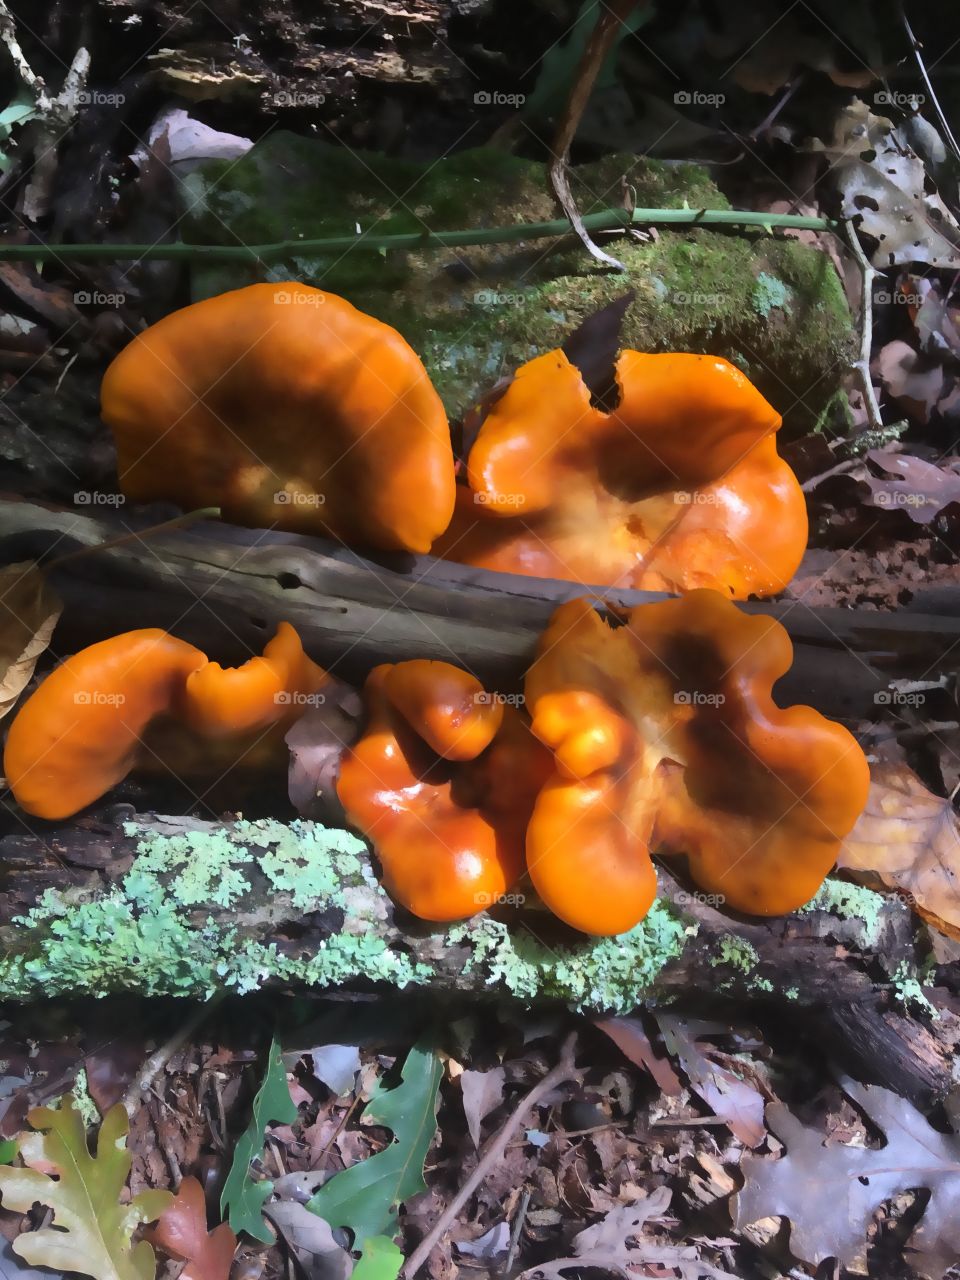 Fungus!